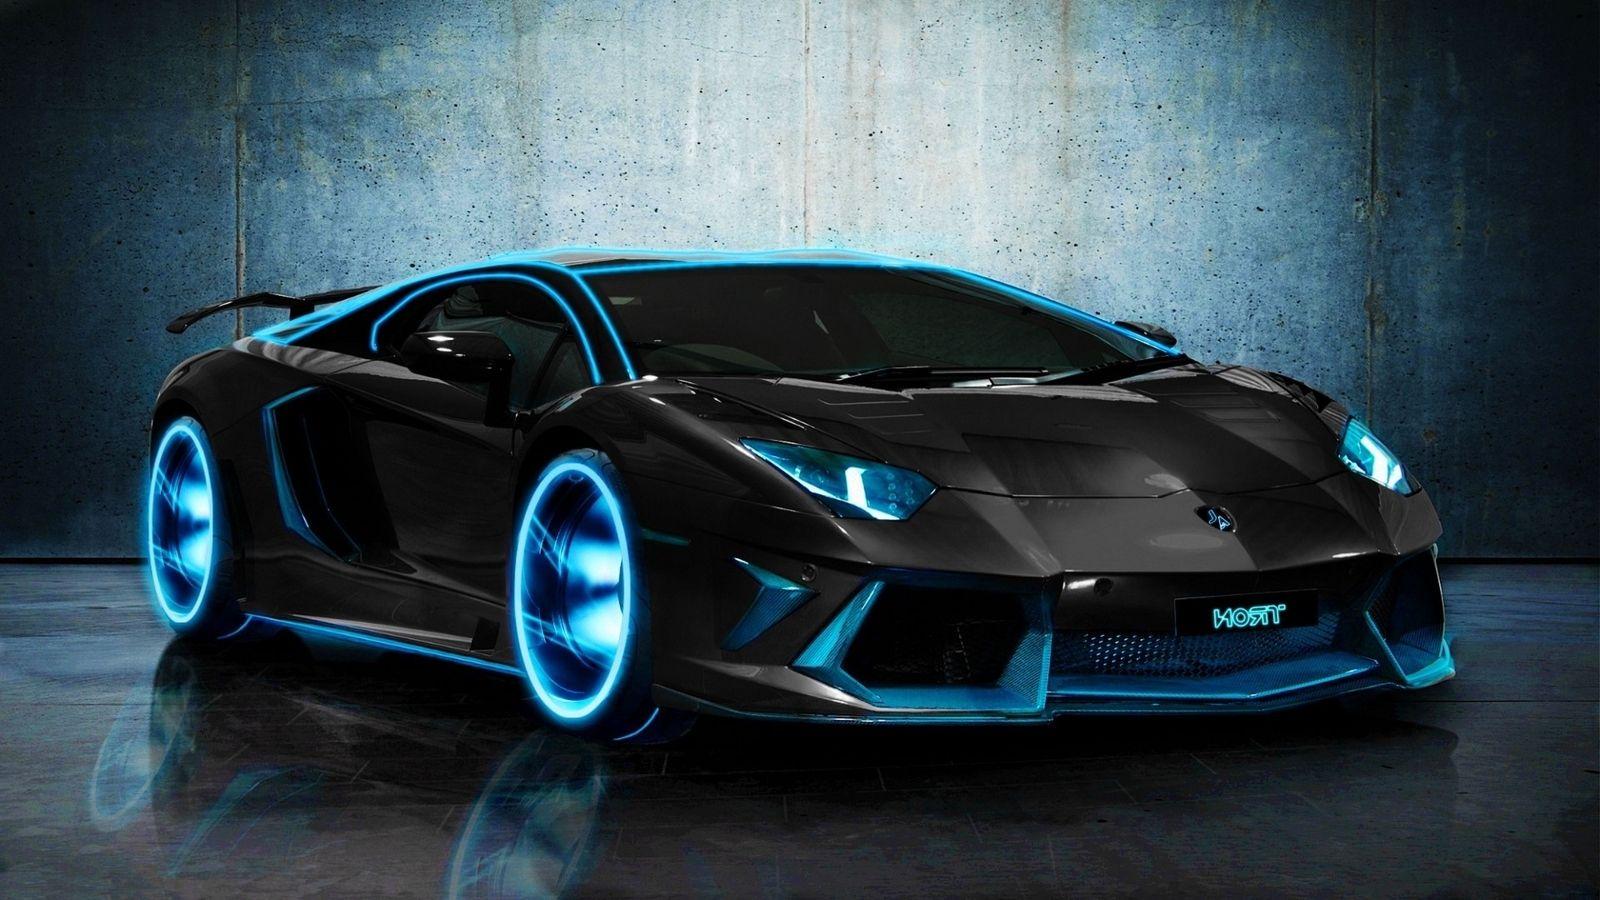 Blue Lamborghini Wallpaper Picture. Vehicles Wallpaper